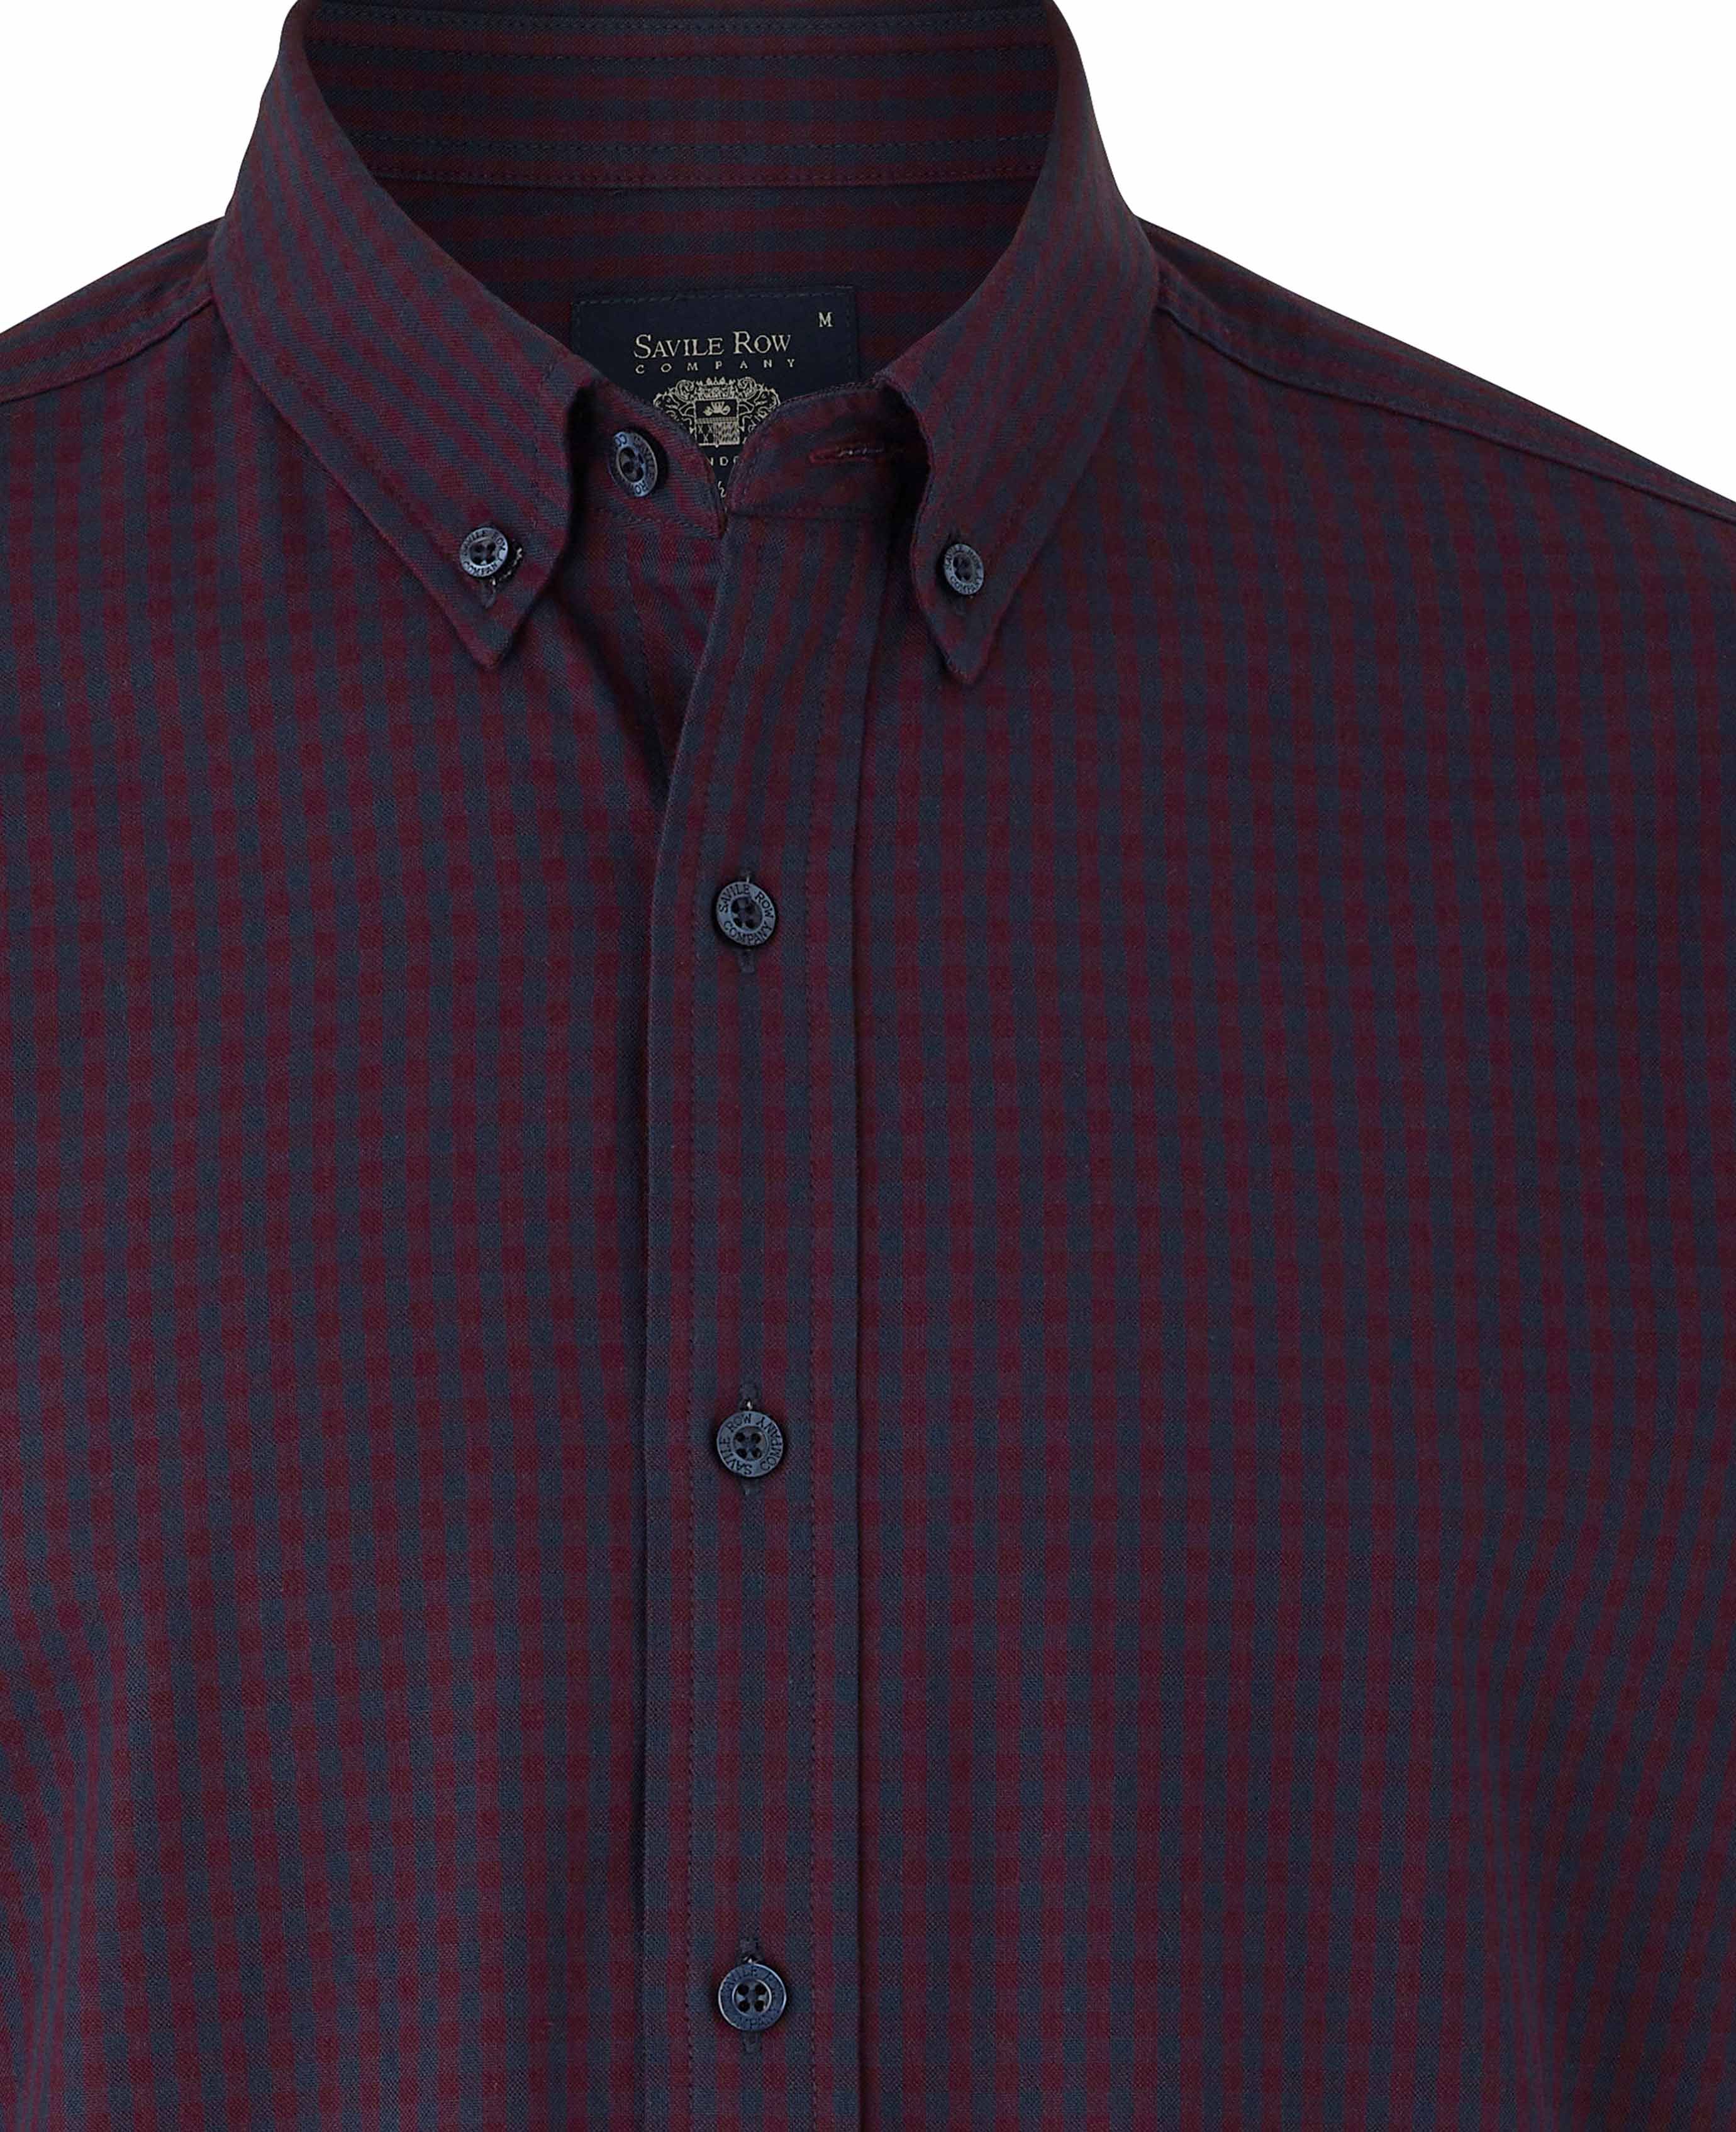 Men’s Gingham Oxford Shirt in Navy & Maroon | Savile Row Co